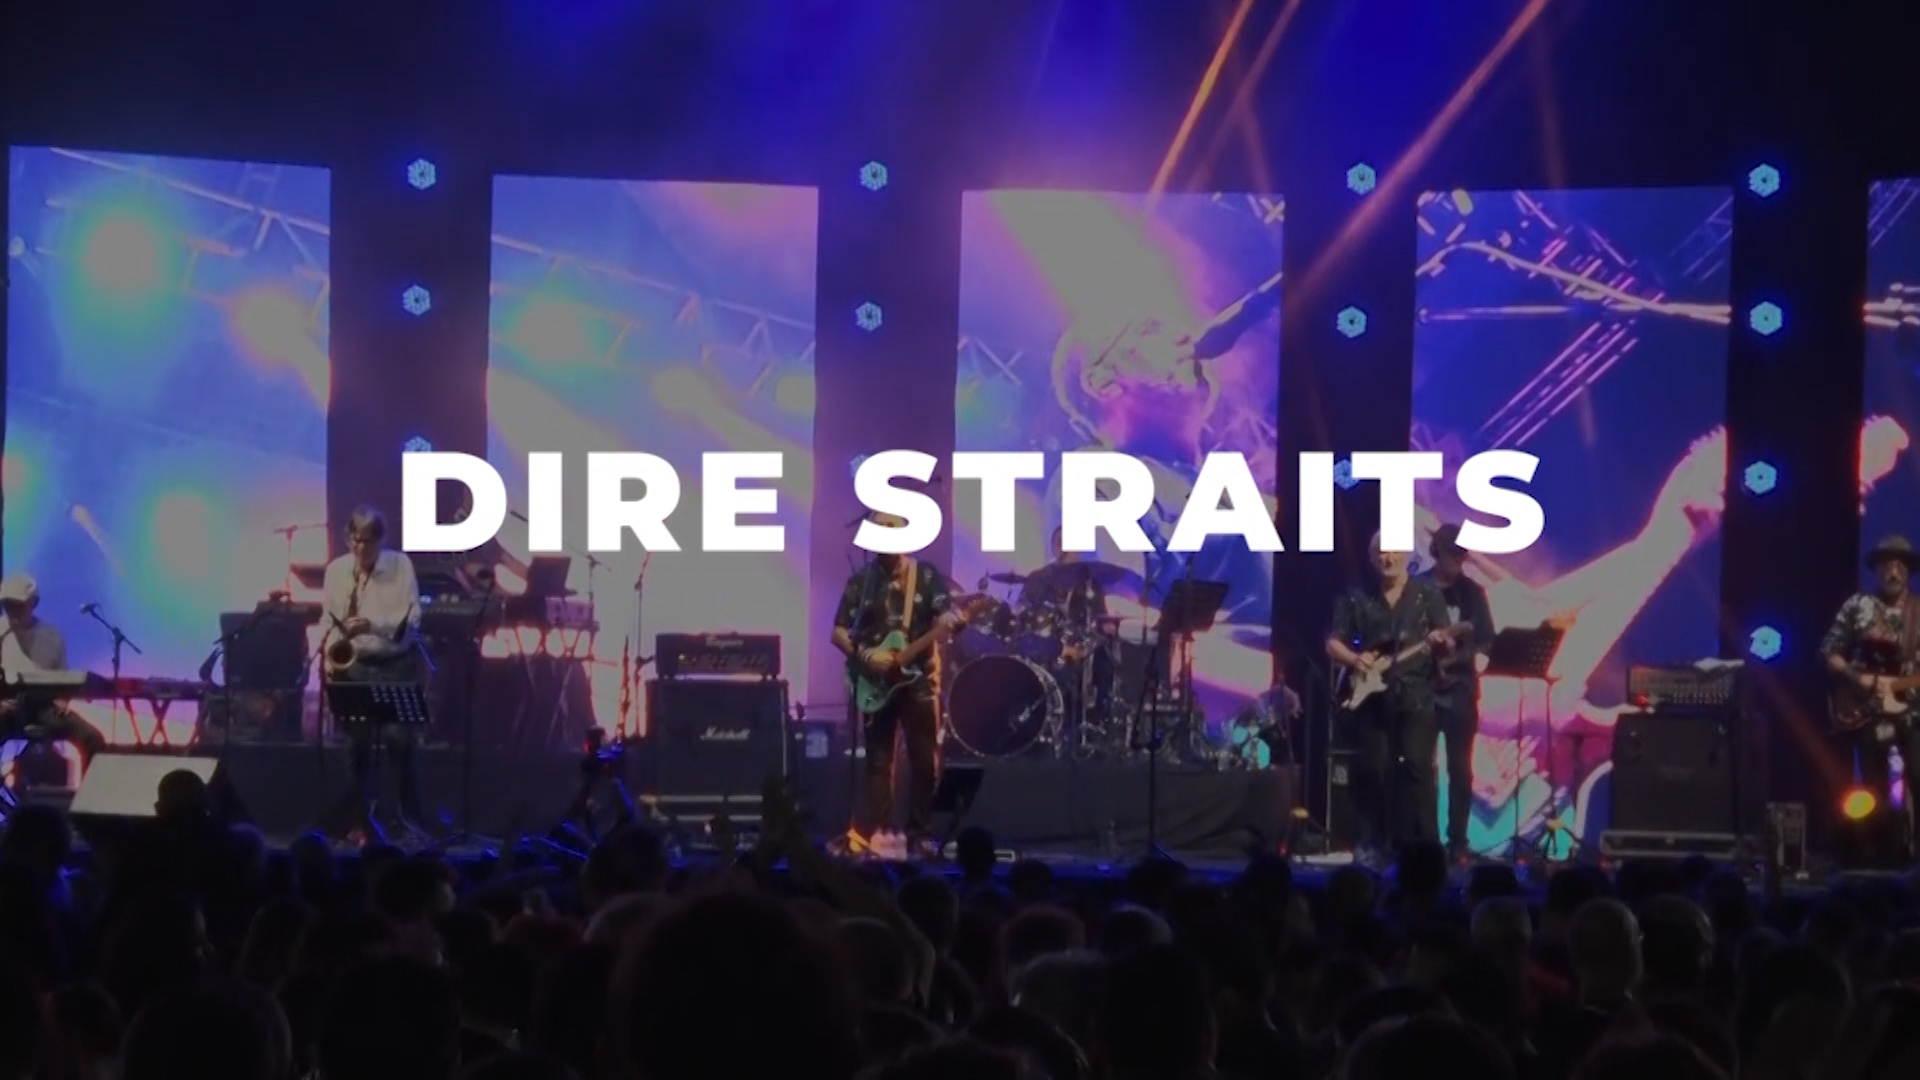 Le Club – Show Dire Straits no Colosso